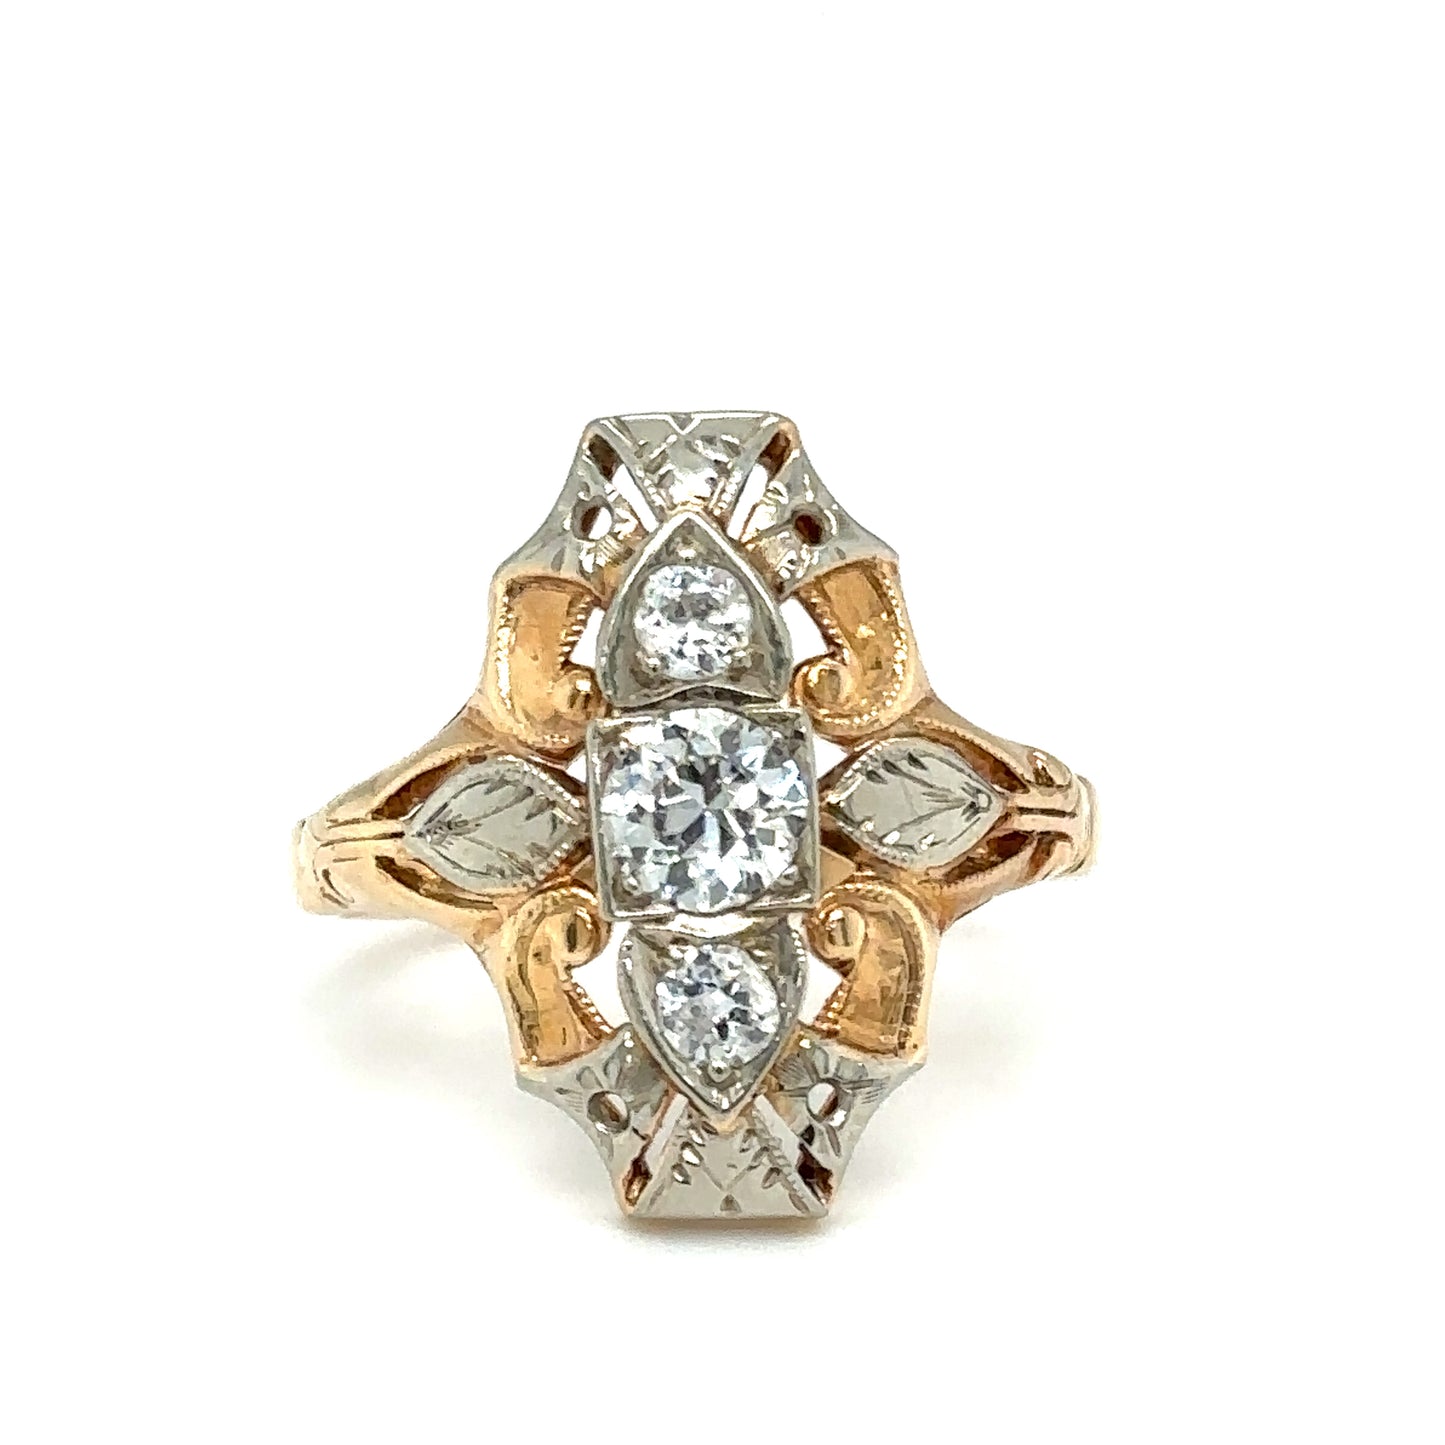 Circa 1920s Art Deco 0.70 CTW Diamond Ring in Two Tone 14K Gold